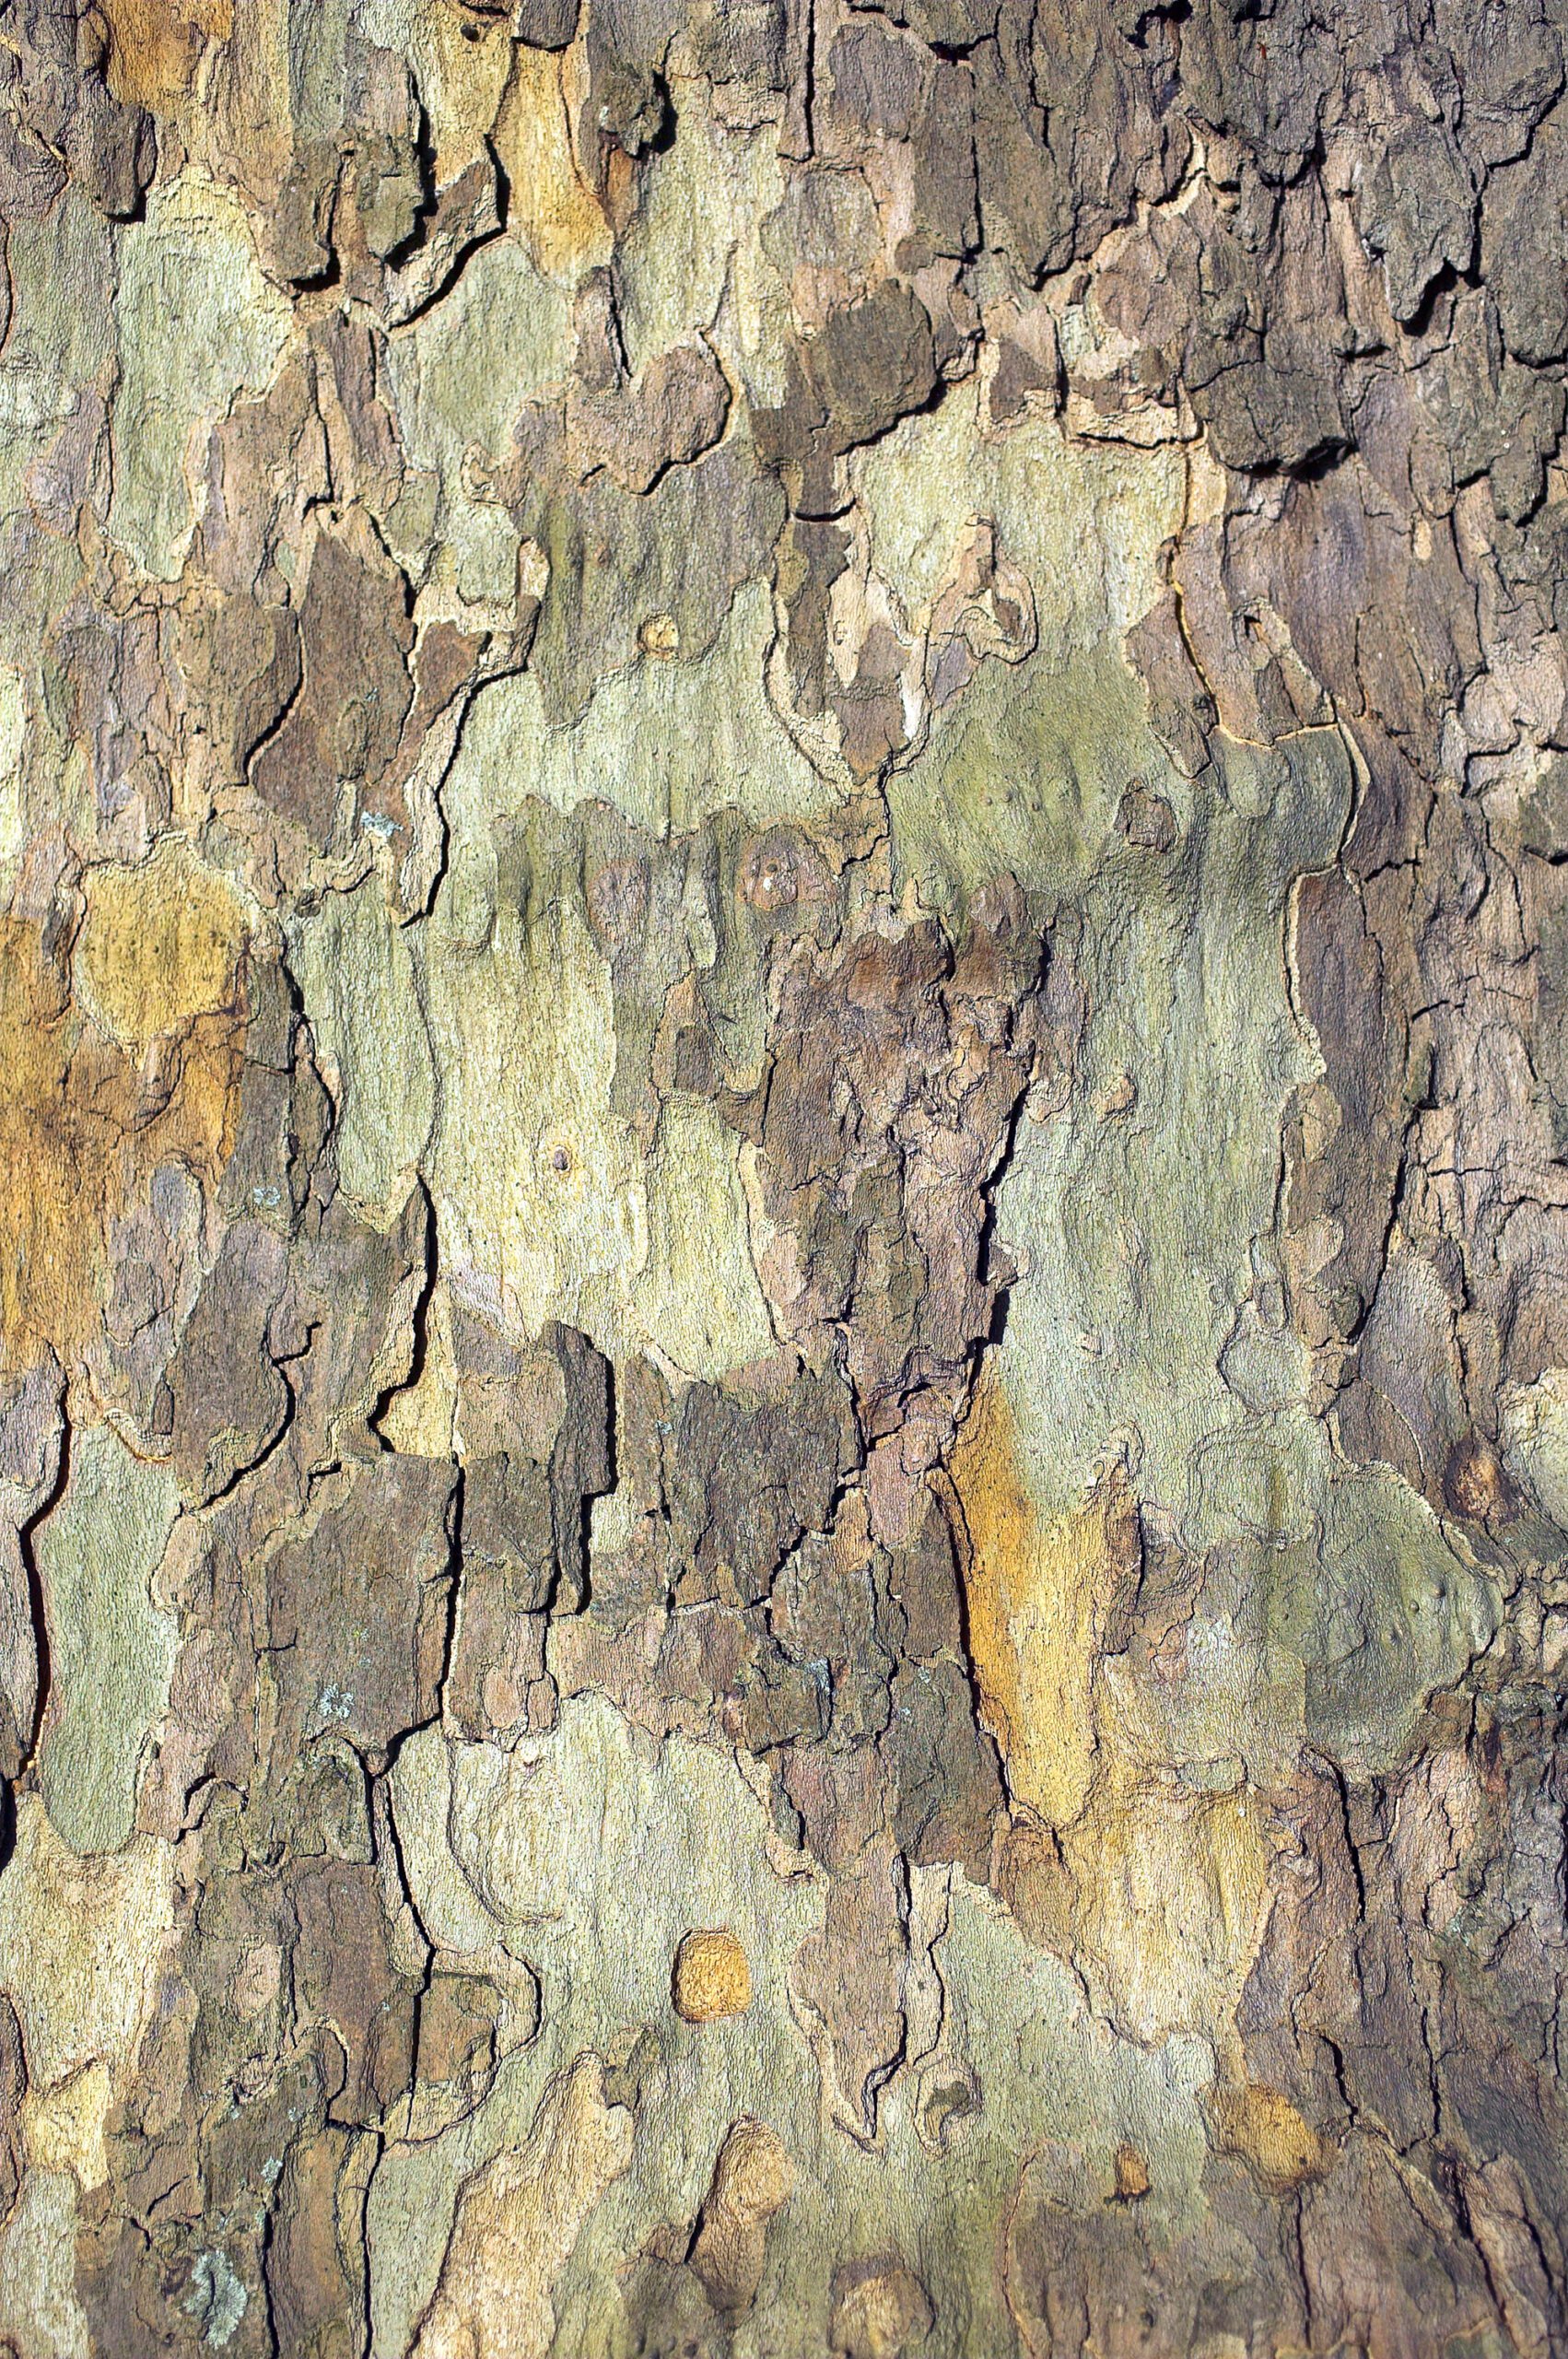 Platanus hispanica London Plane trunk bark